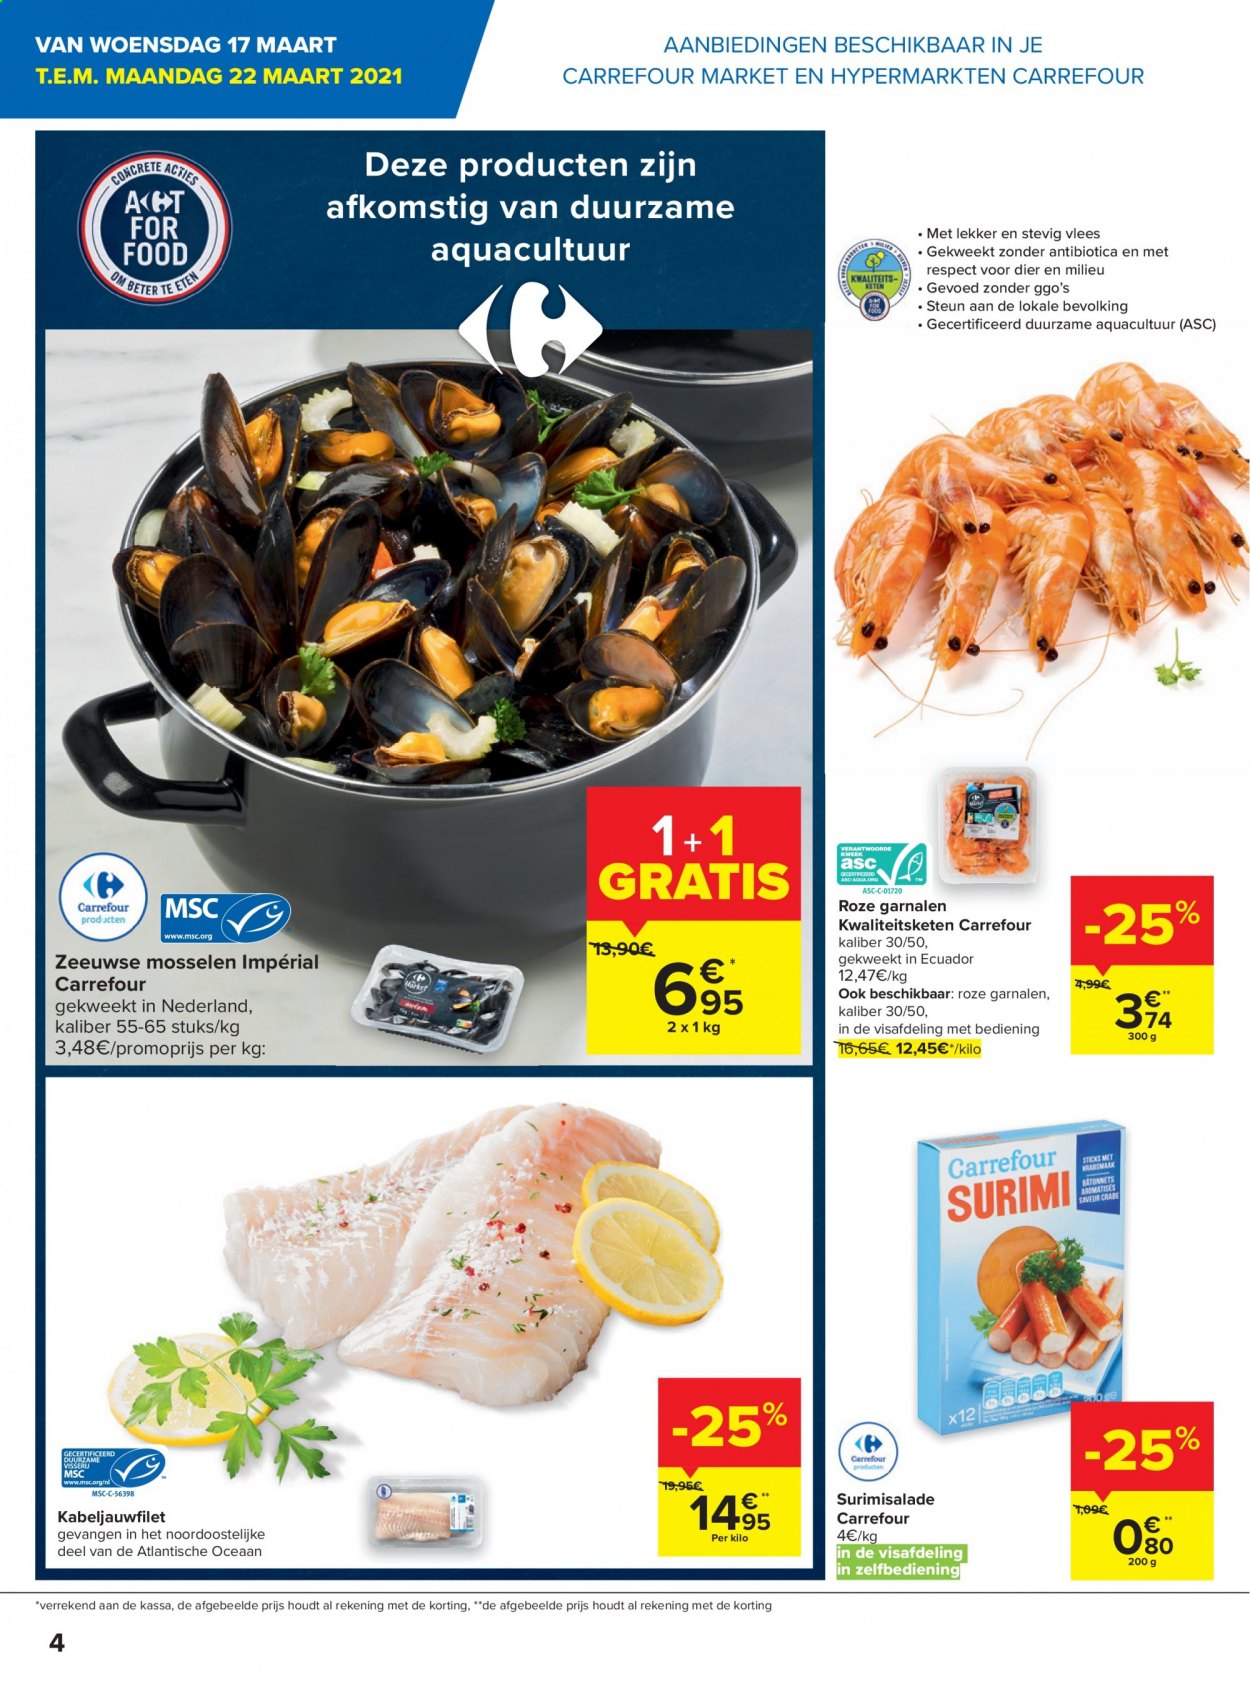 thumbnail - Carrefour-aanbieding - 17/03/2021 - 22/03/2021 -  producten in de aanbieding - kabeljauwfilet, garnalen. Pagina 4.